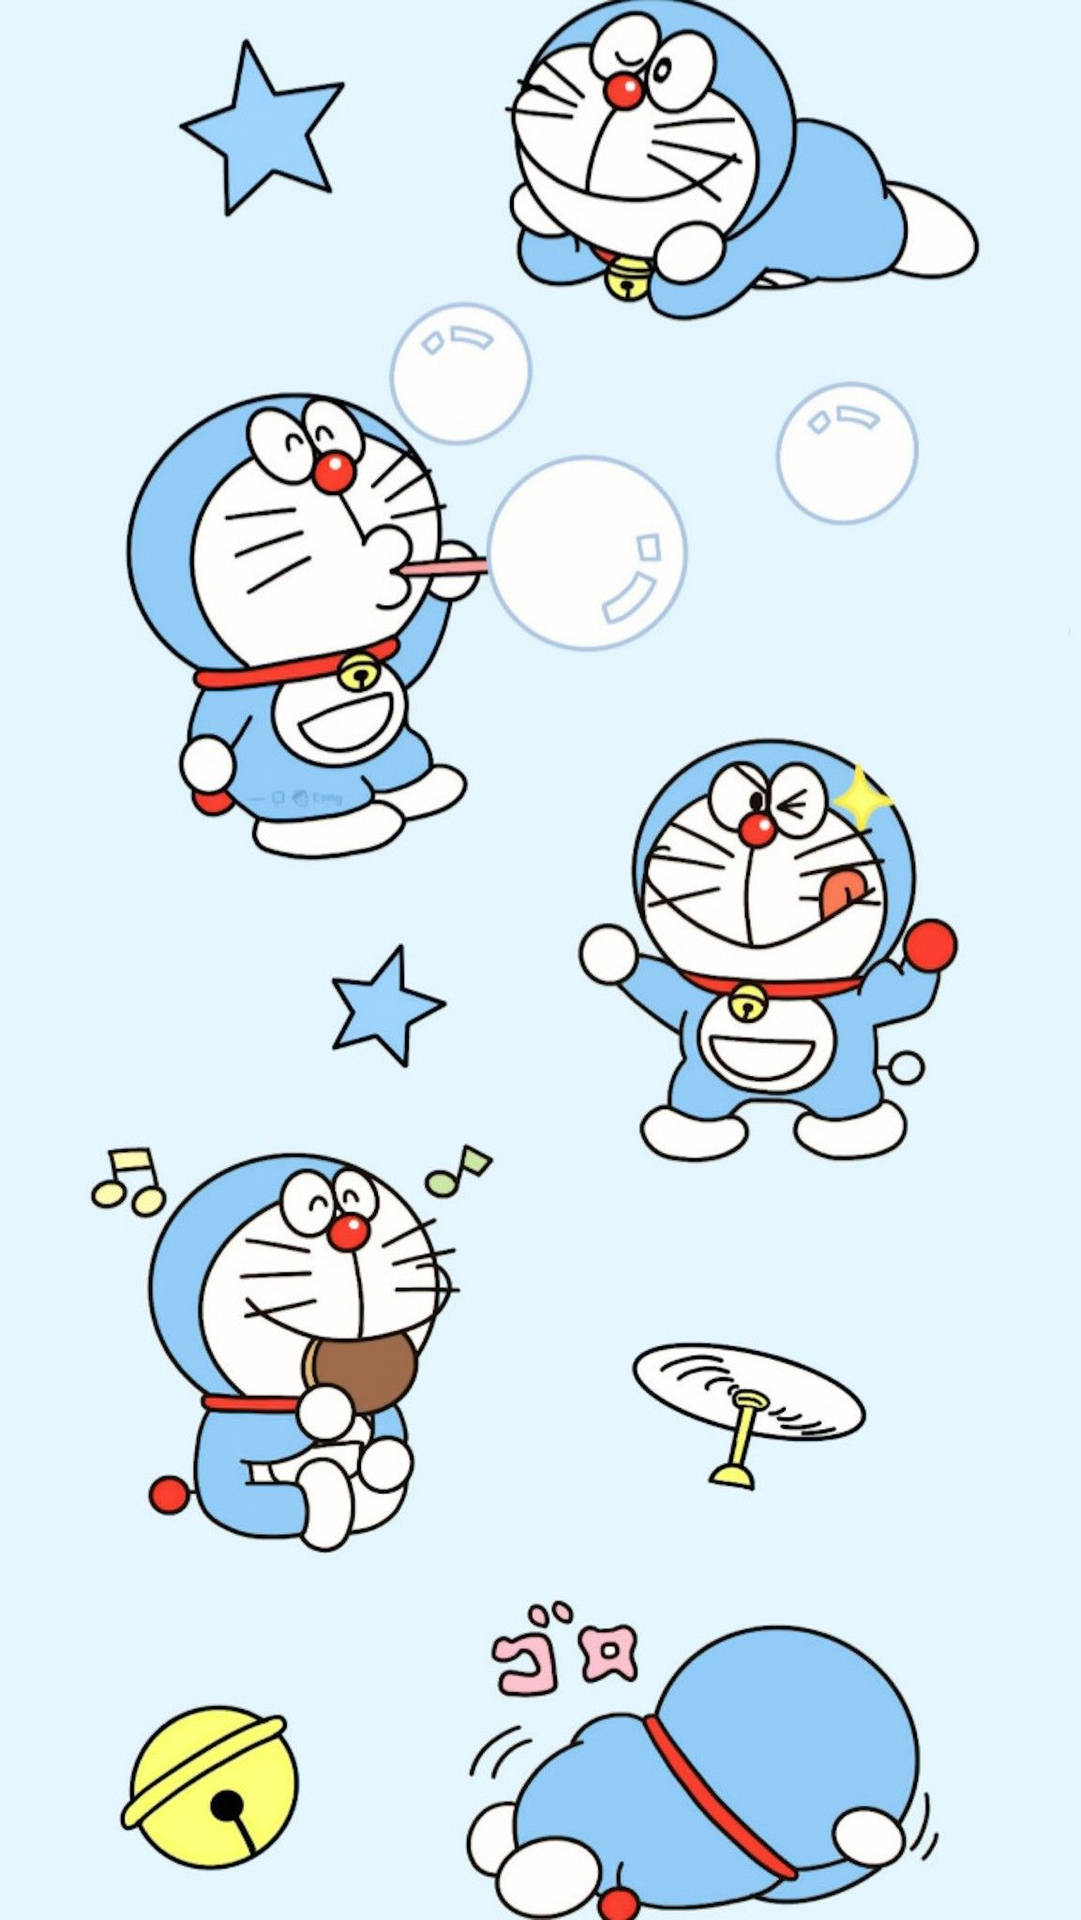 Captivating Doraemon iPhone Digital Art Wallpaper